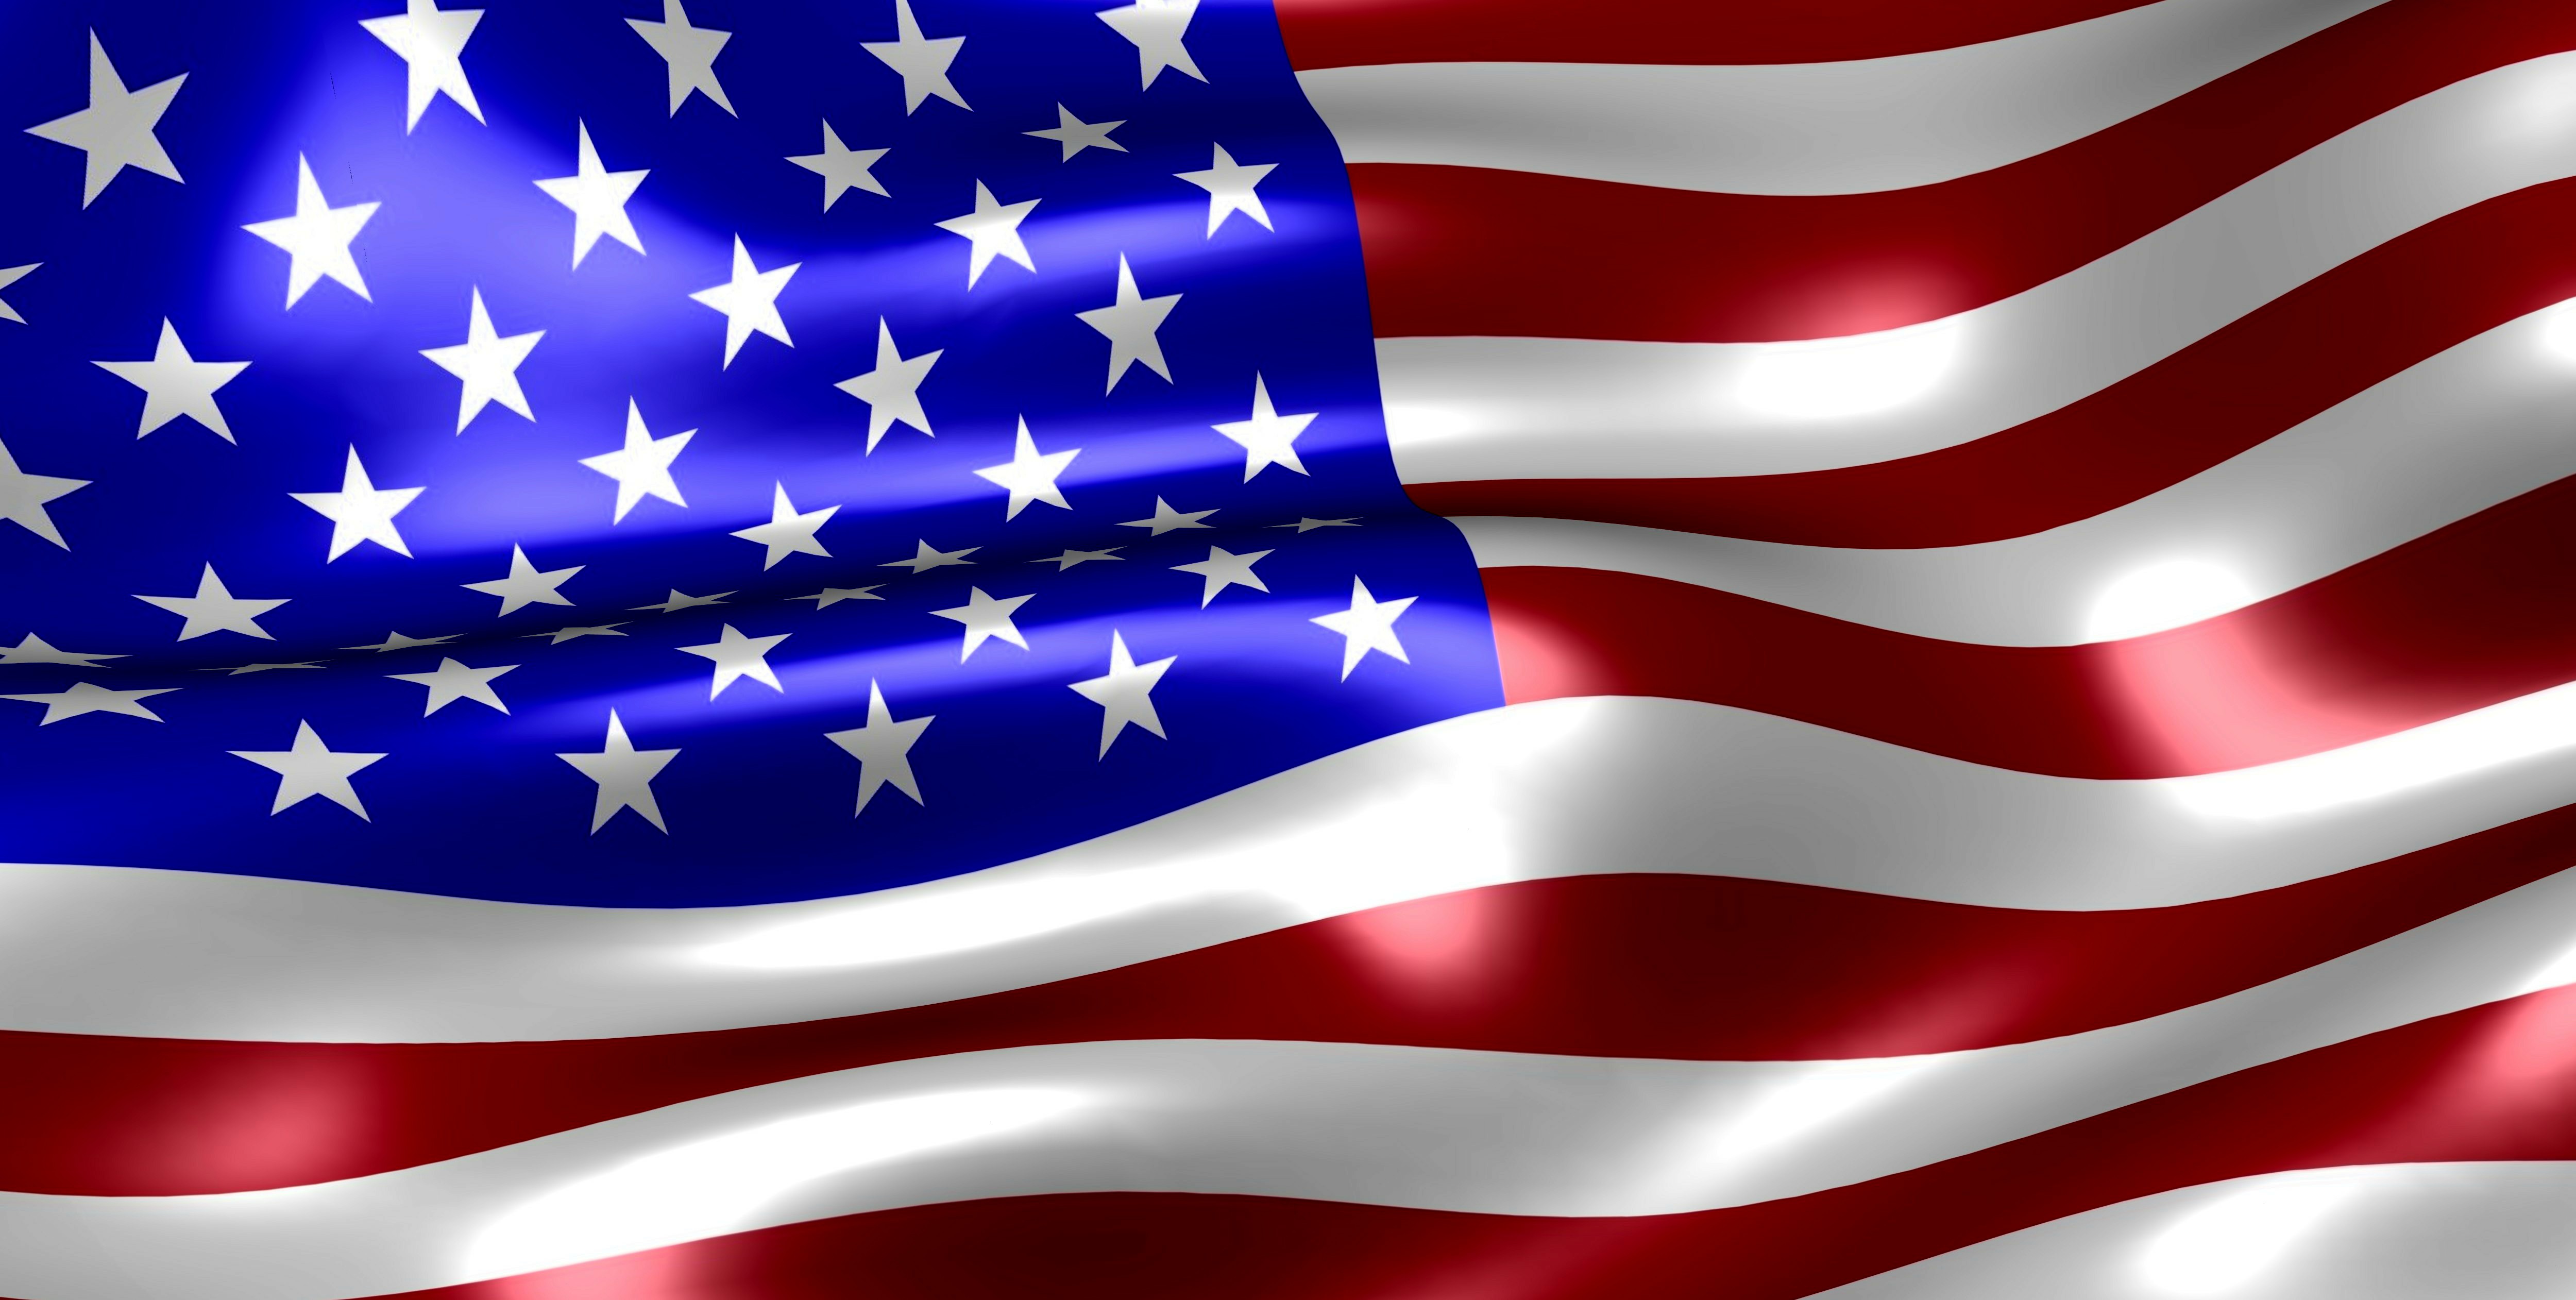 download-filevisual-of-usa-flag-stars-and-stripes-fjm88nljpg-wikimedia